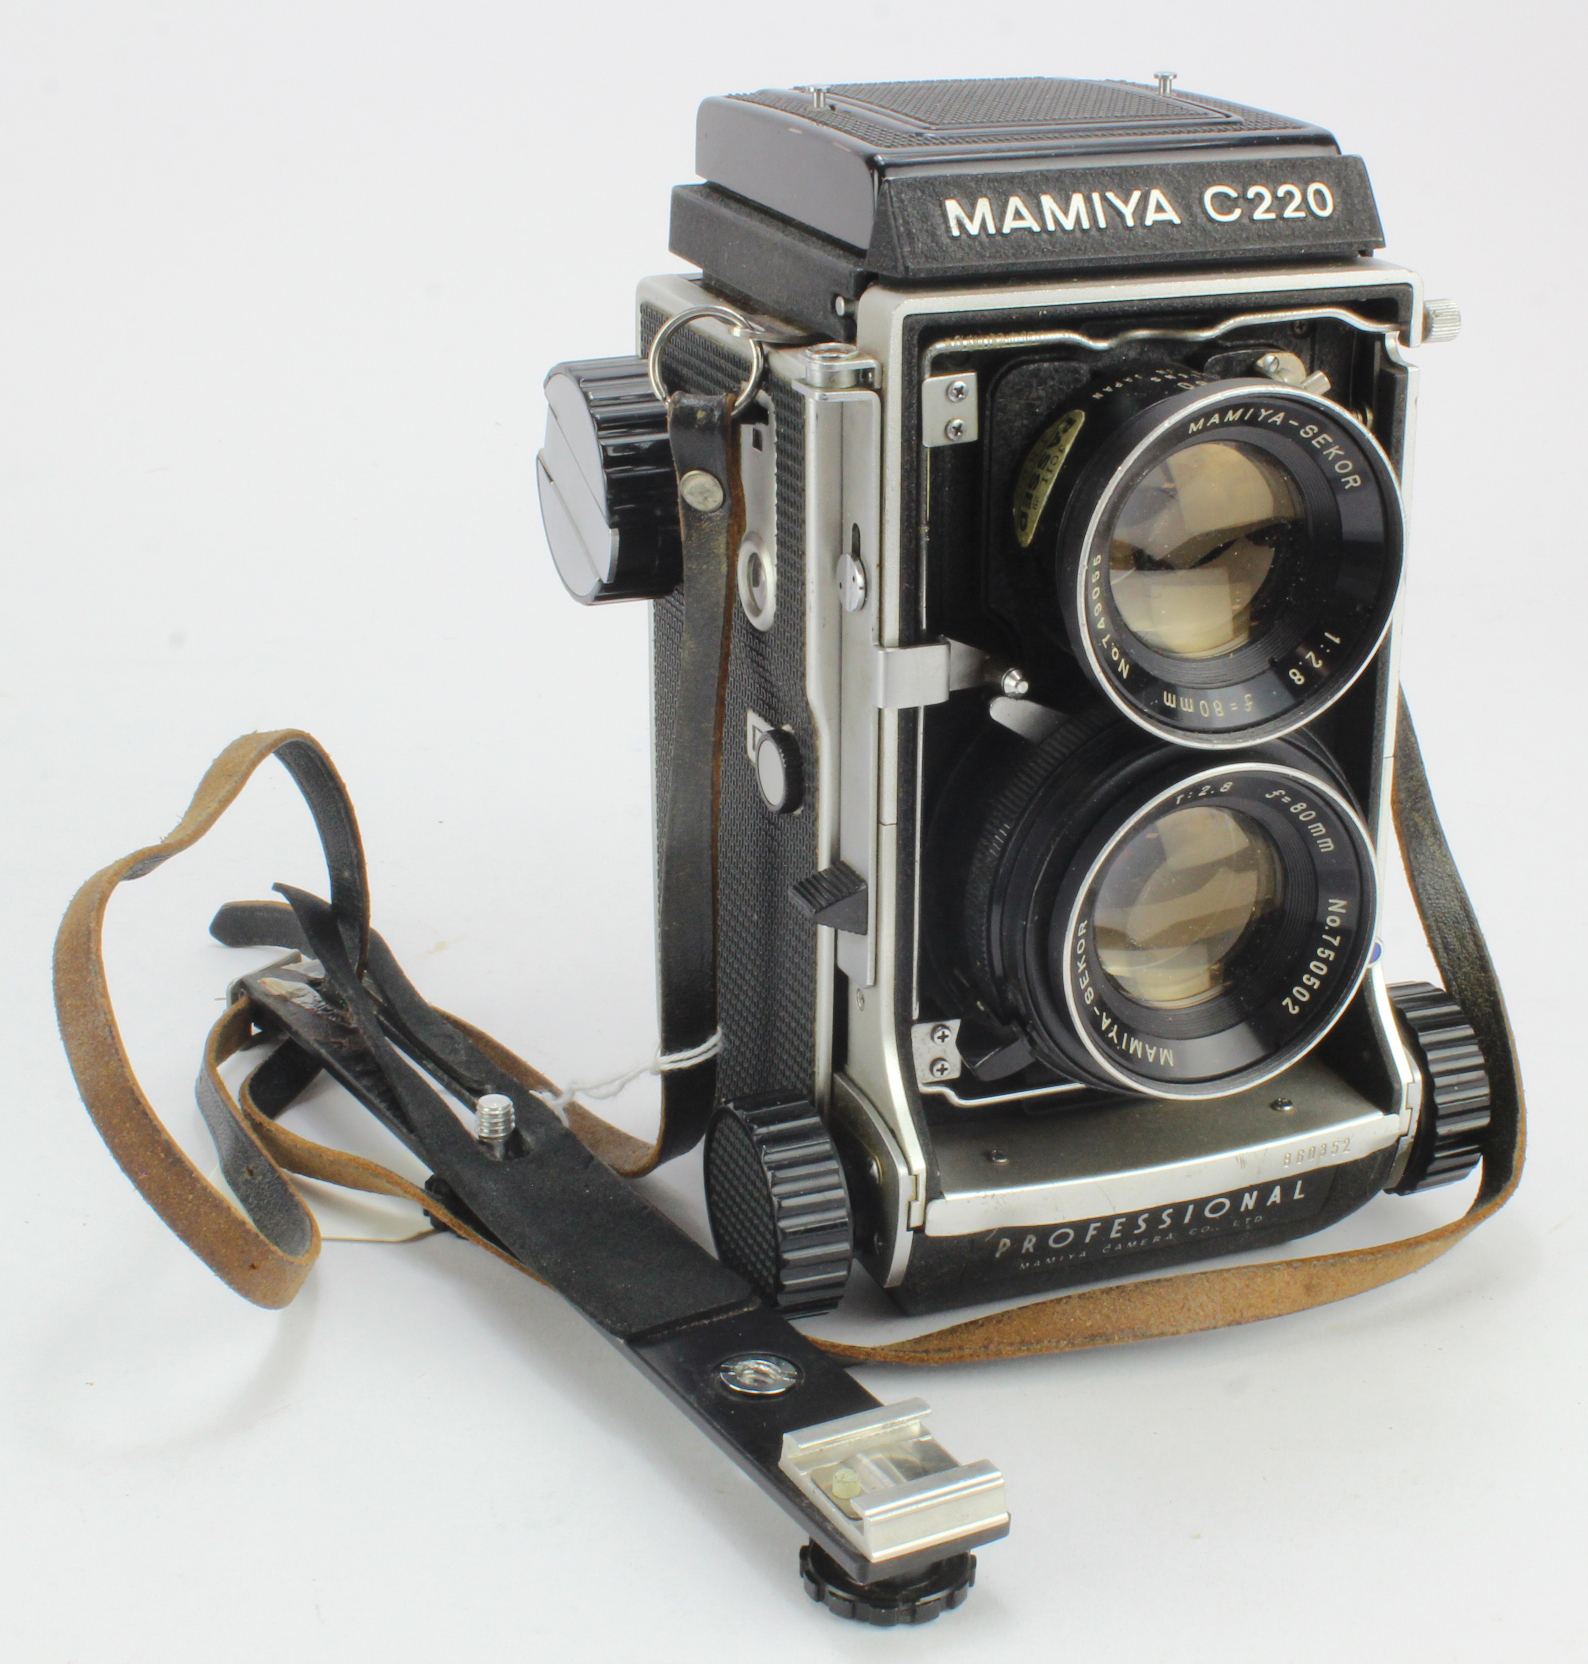 Mamiya C220 Professional camera